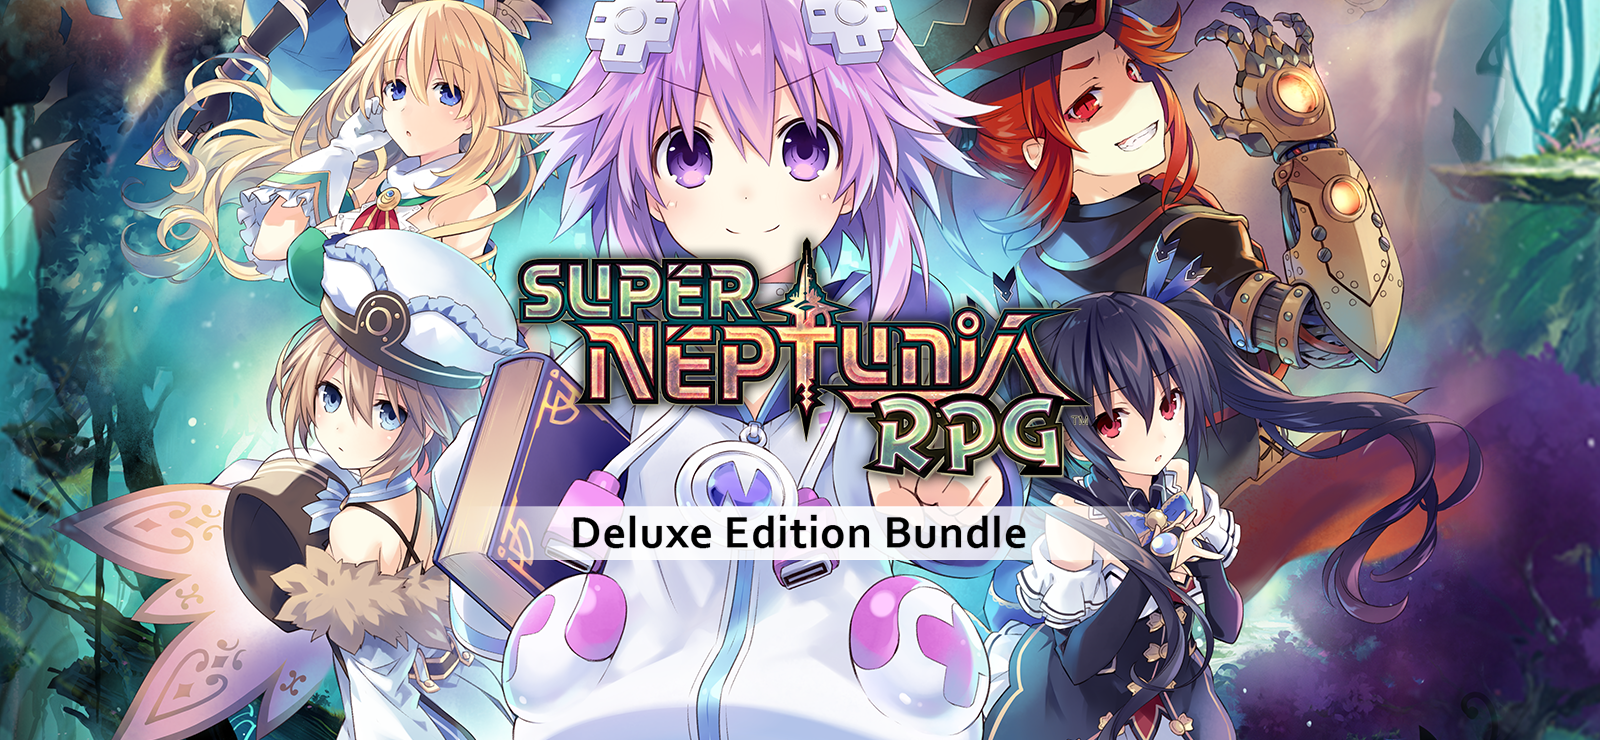 Super Neptunia Deluxe Edition Bundle